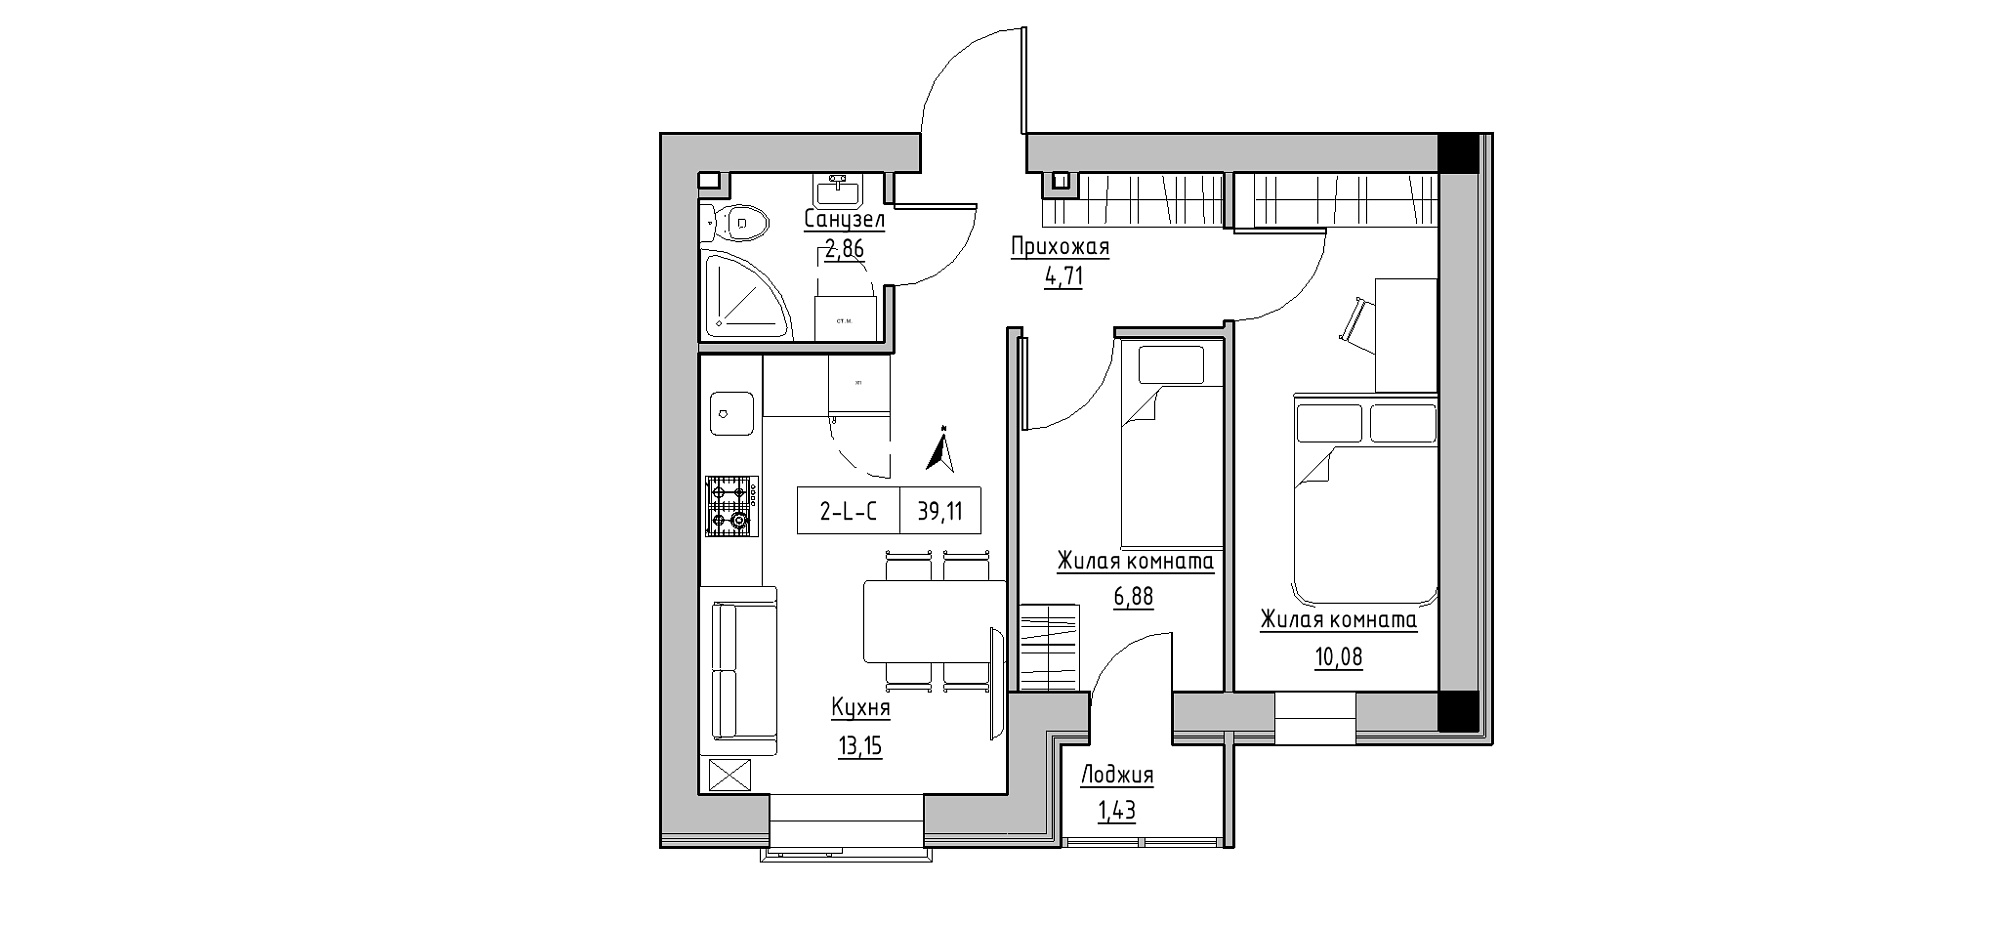 Planning 2-rm flats area 39.11m2, KS-020-01/0005.